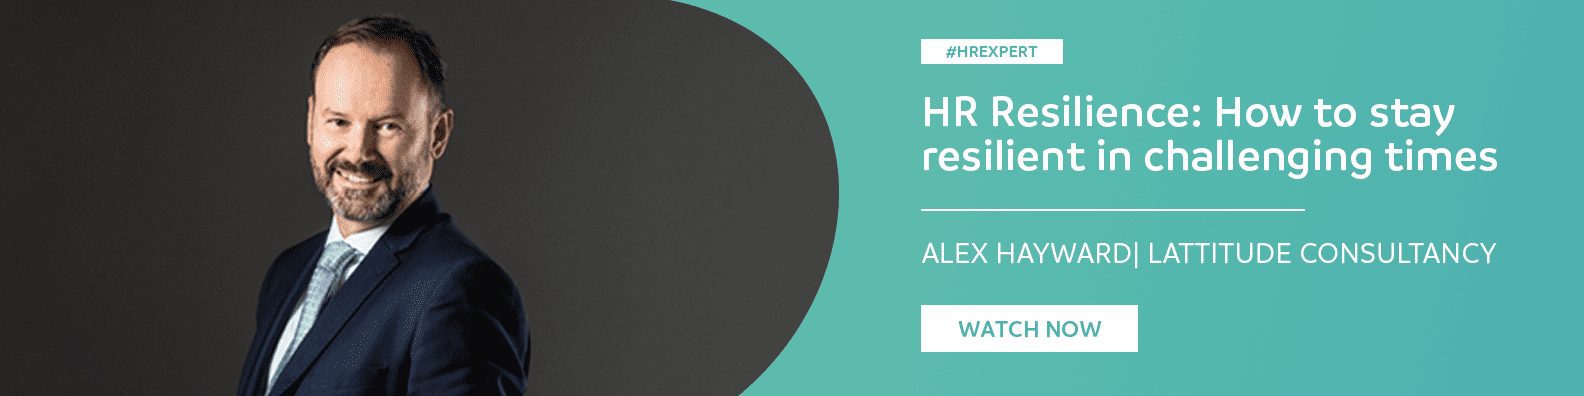 HR Expert Webinar Recording: HR Resilience